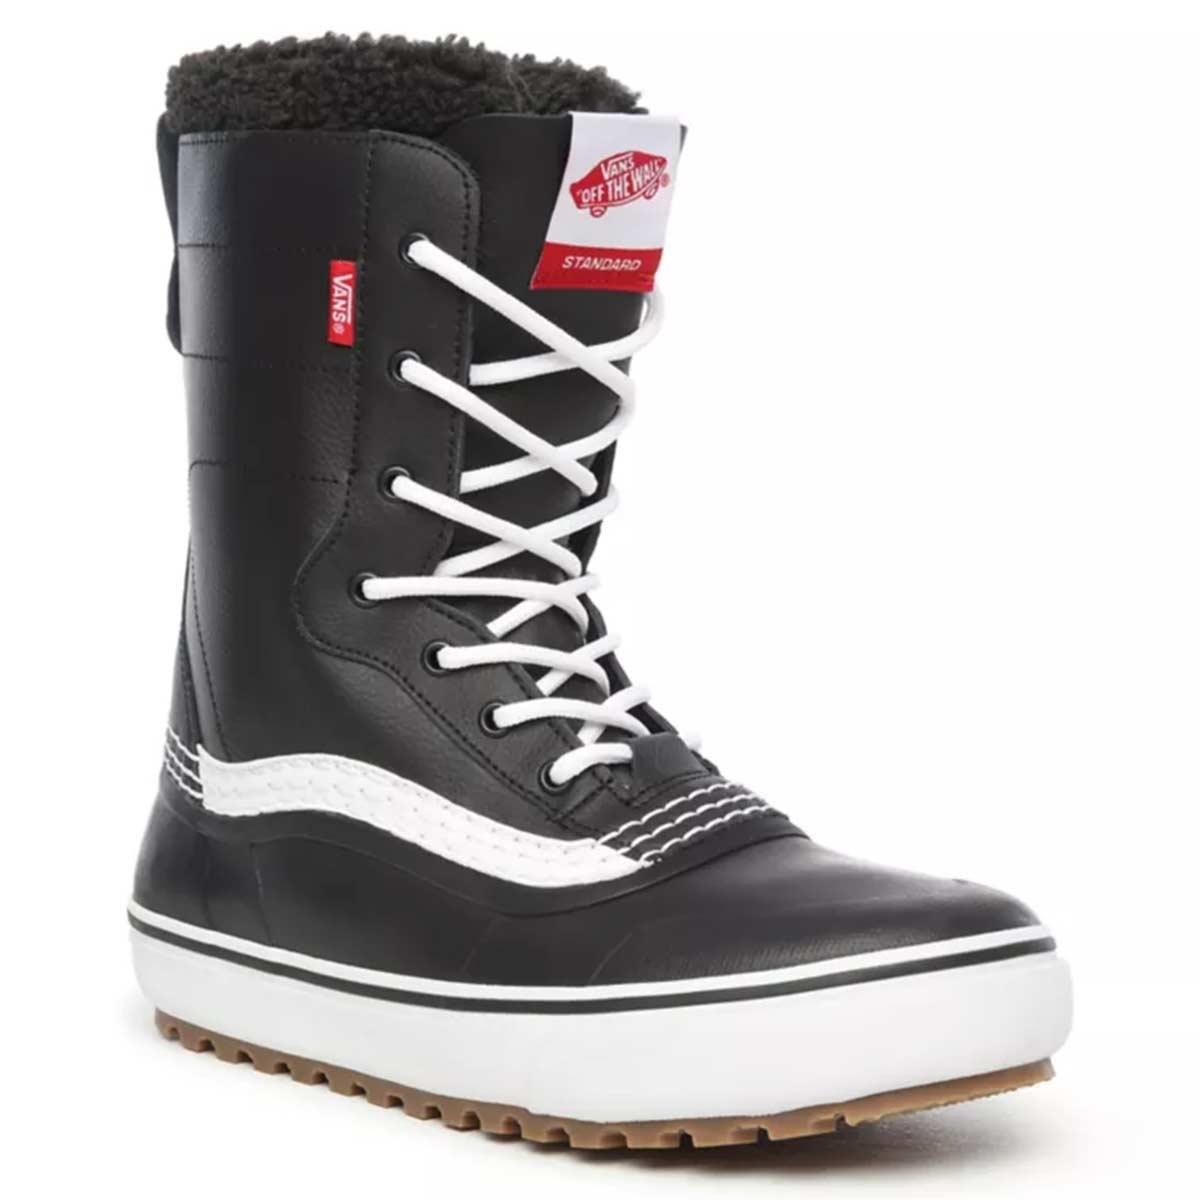 cebra La Iglesia proteger Vans Standard MTE Snow Boots, Black/White